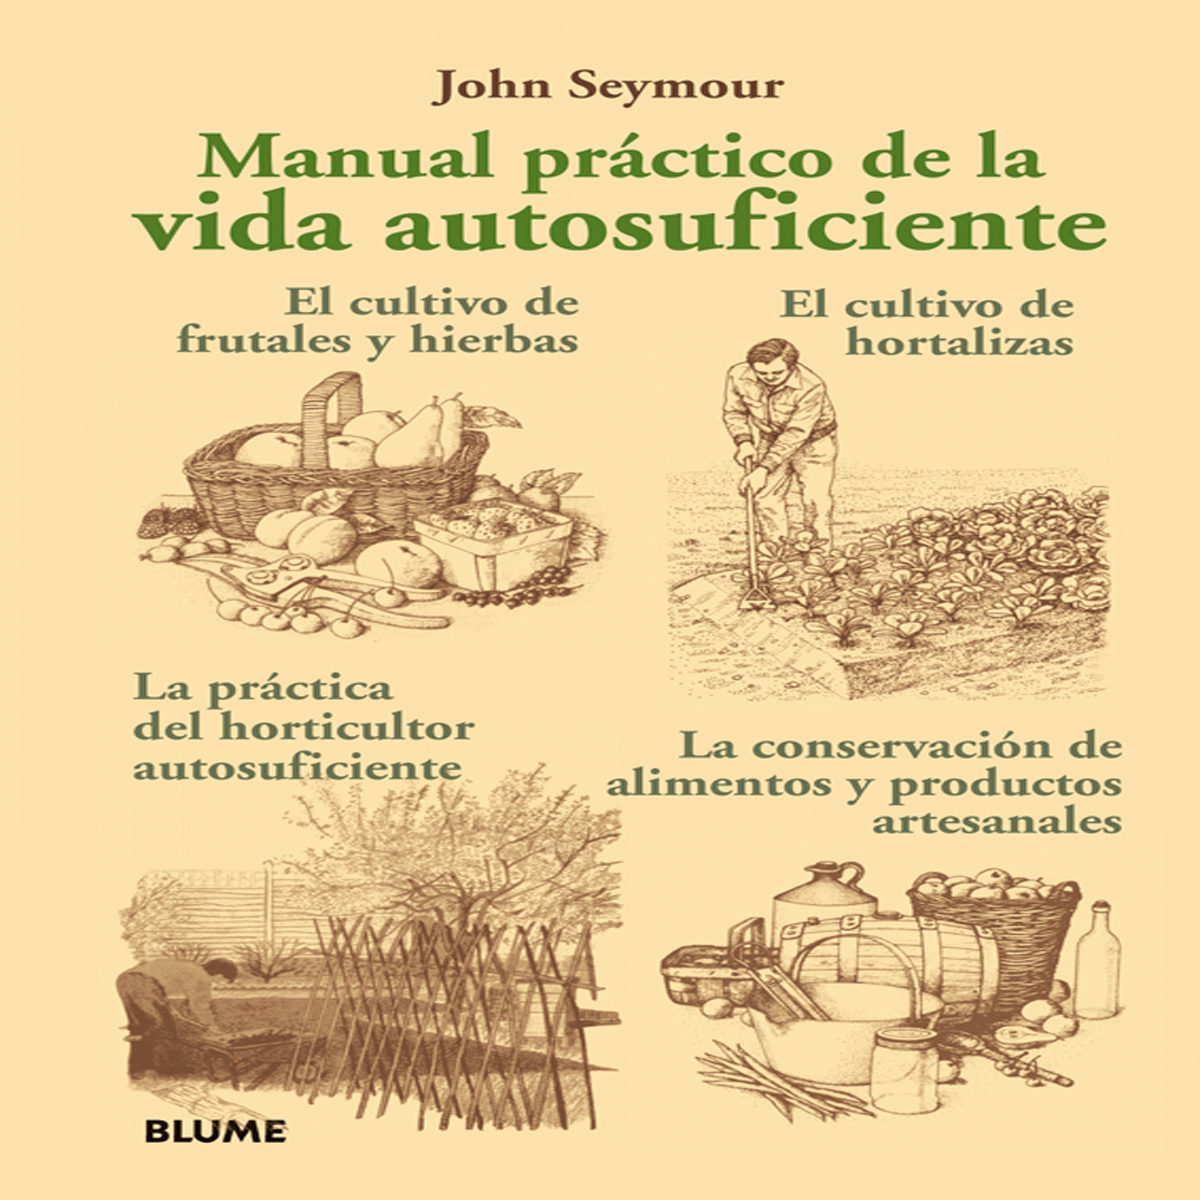 John seymour manual practico vida autosuficiente pdf